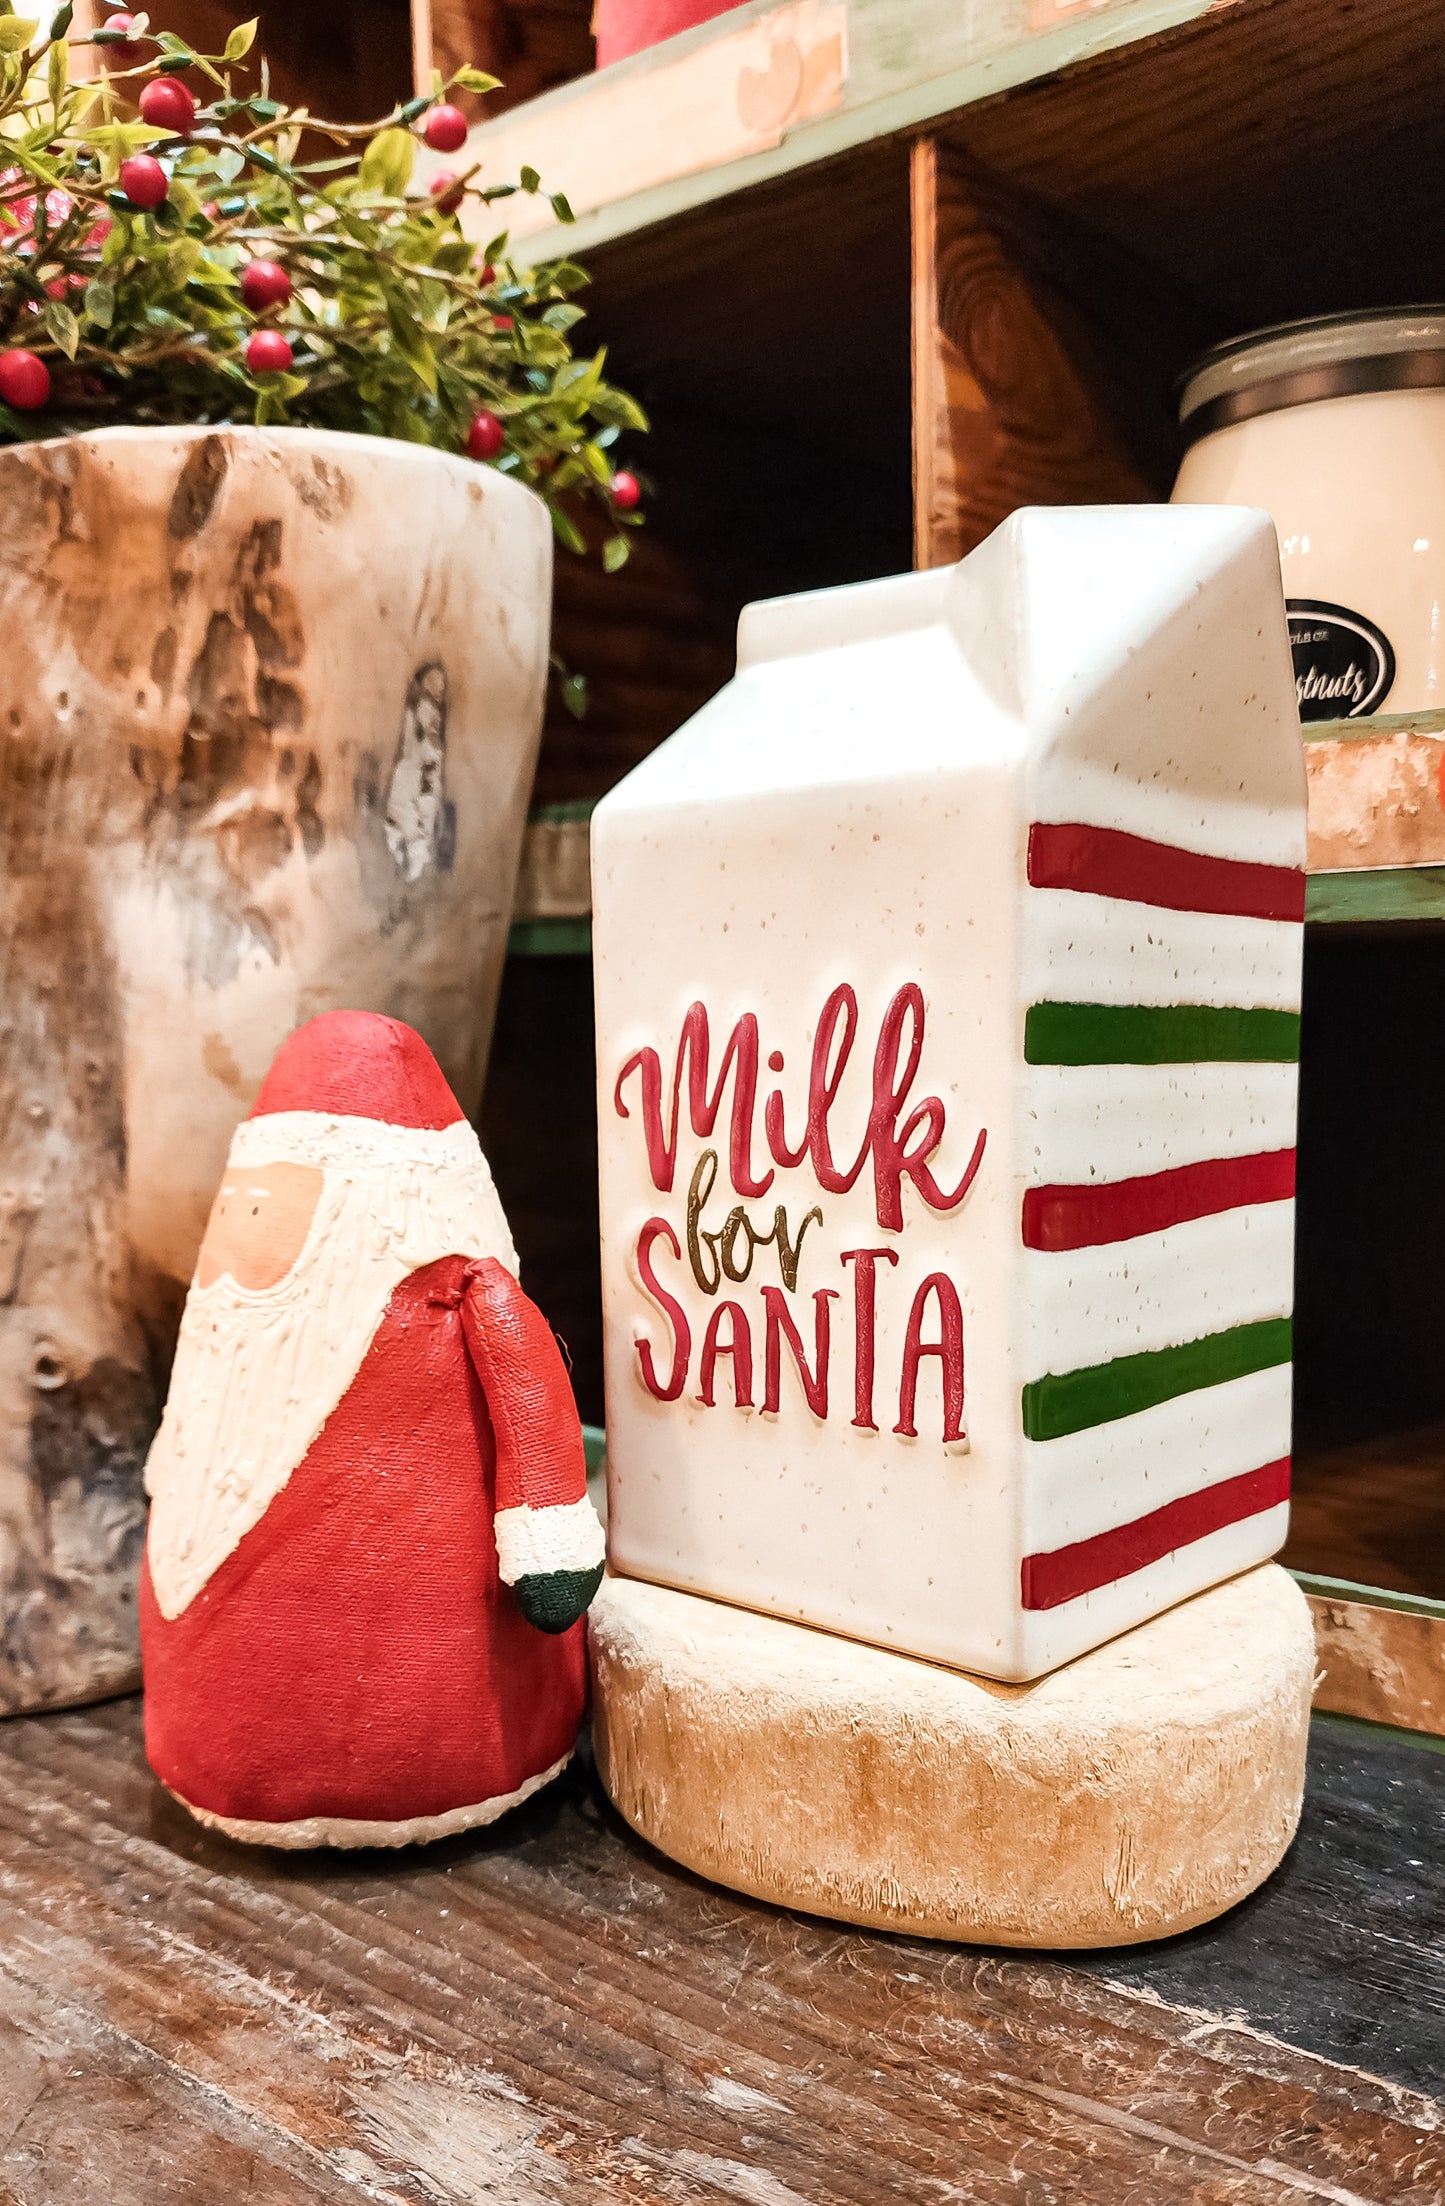 Santa Face On Milk Carton